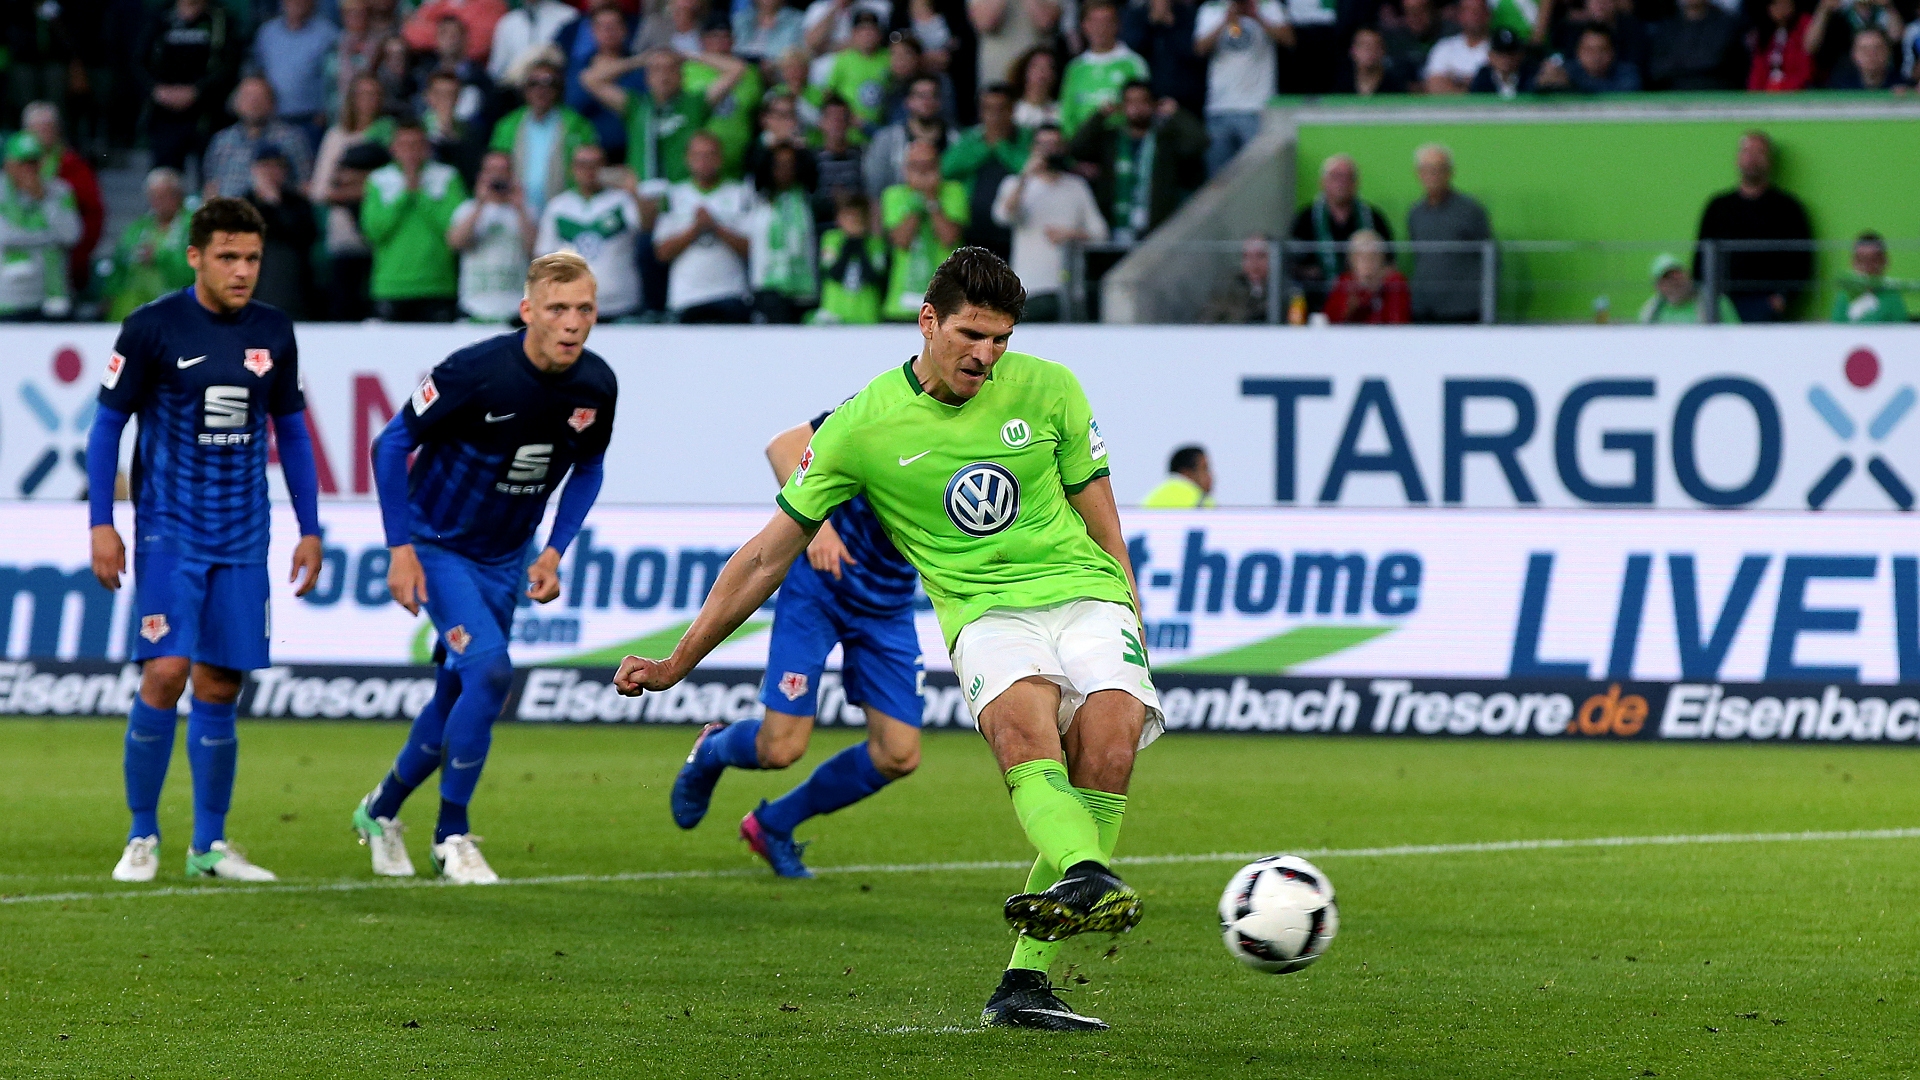 Eintracht Brauns vs Wolfsburg (01:45 &#8211; 19/10) | Xem lại trận đấu